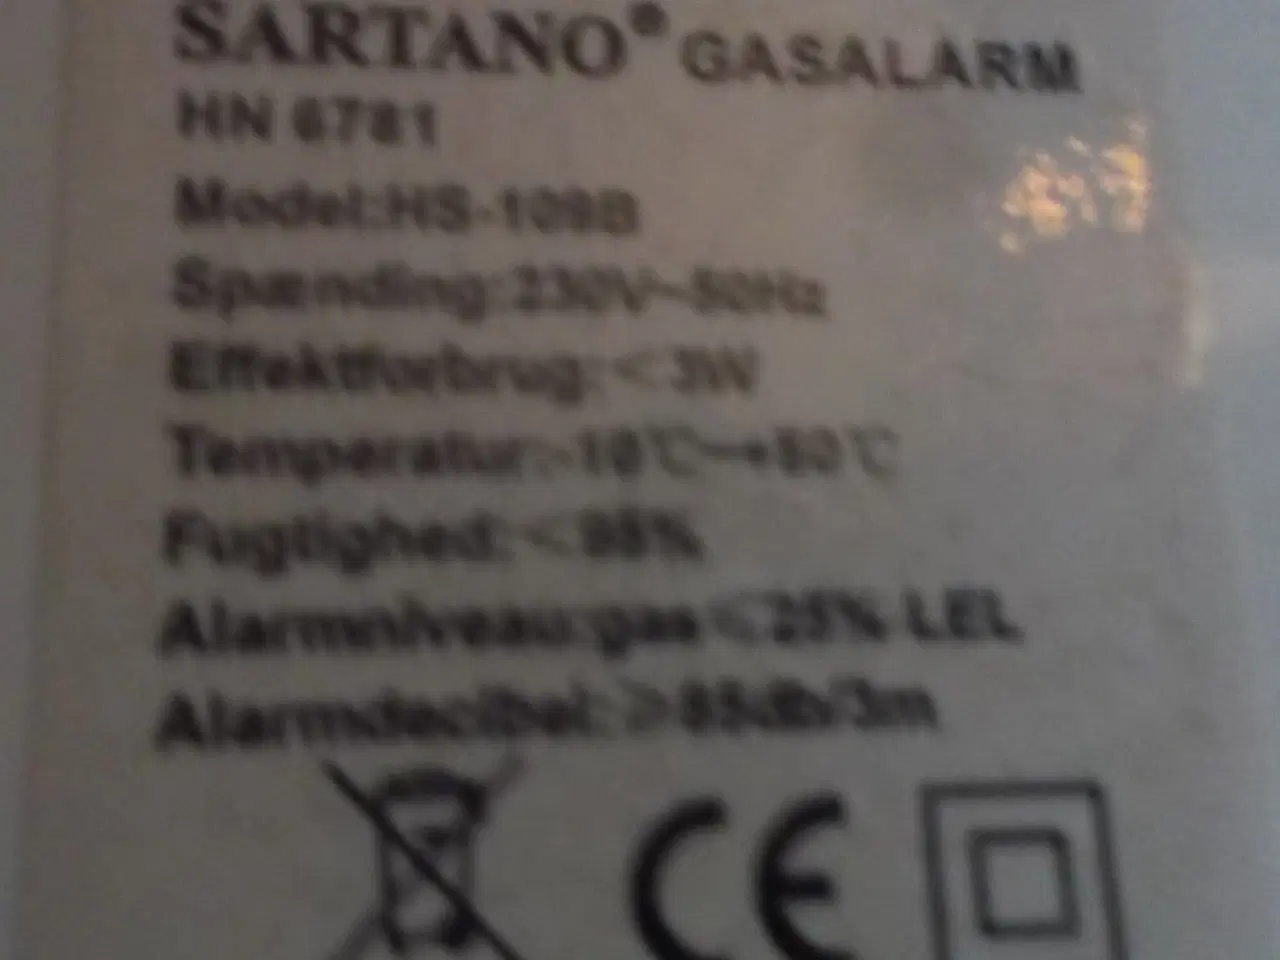 Billede 3 - Sartano husholdnings gasalarm HN 6781